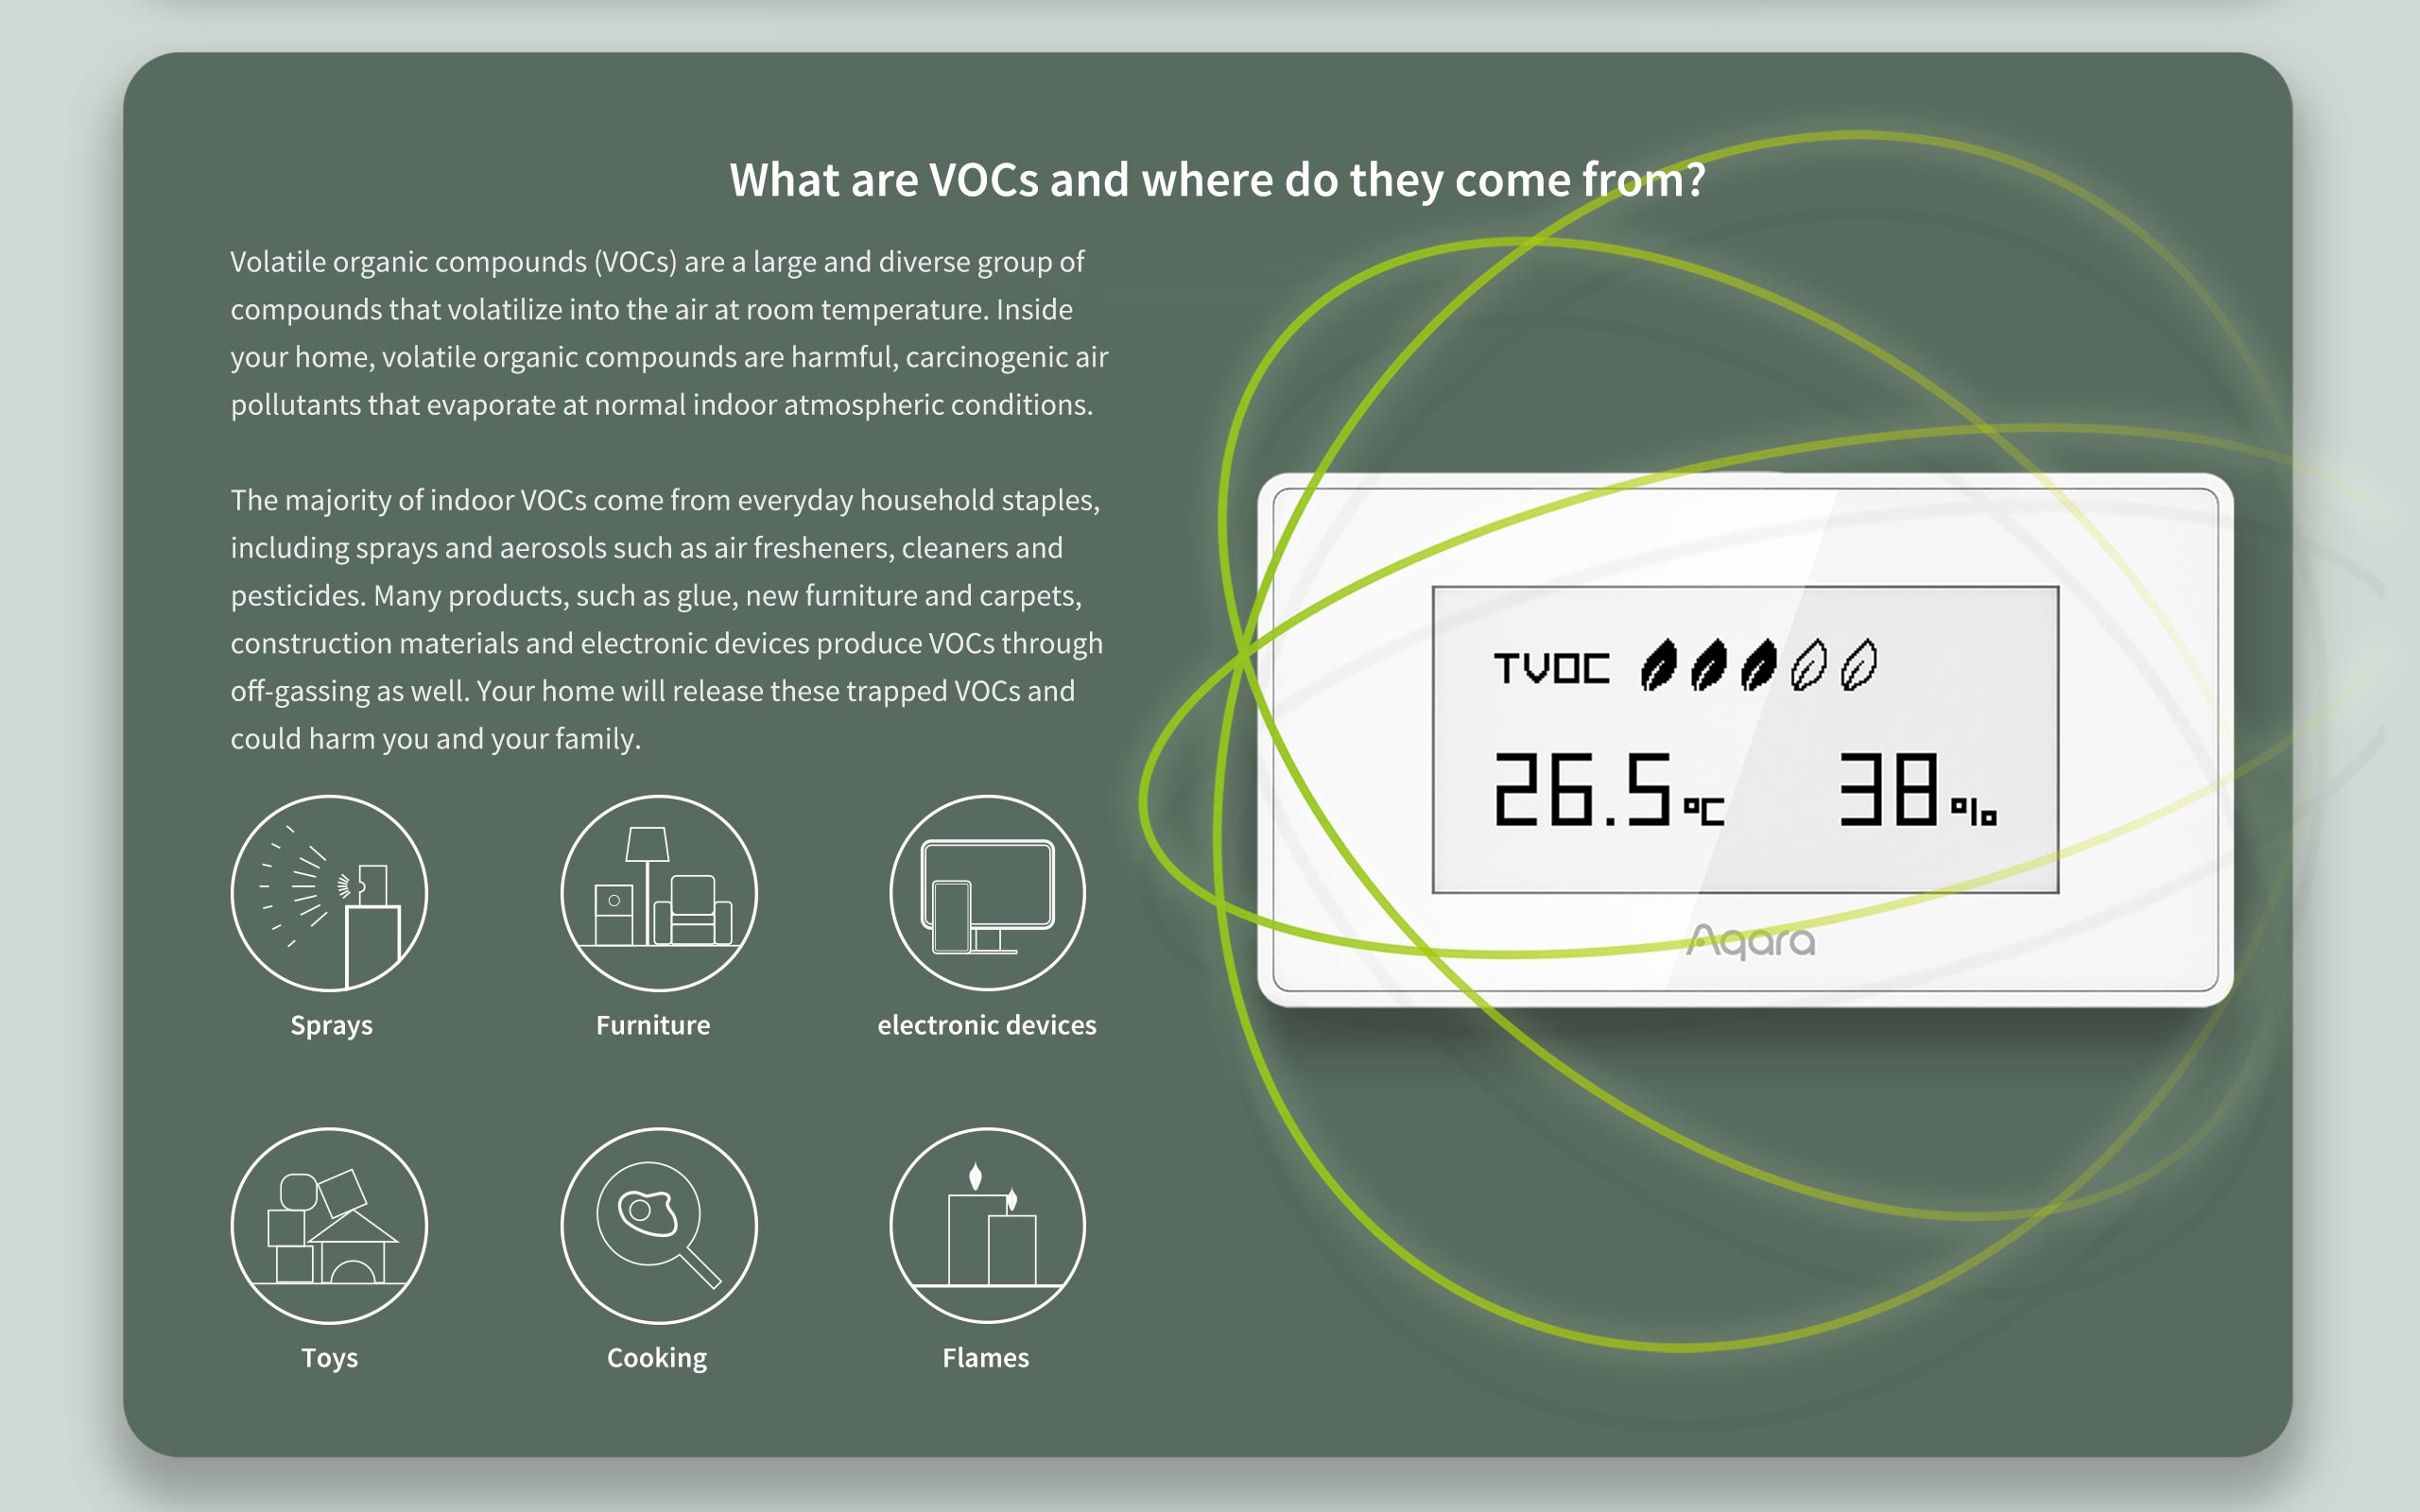 TVOC Air Quality Monitor pc 04 Air Quality Monitor with Temperature and Humidity Sensor - Aqara